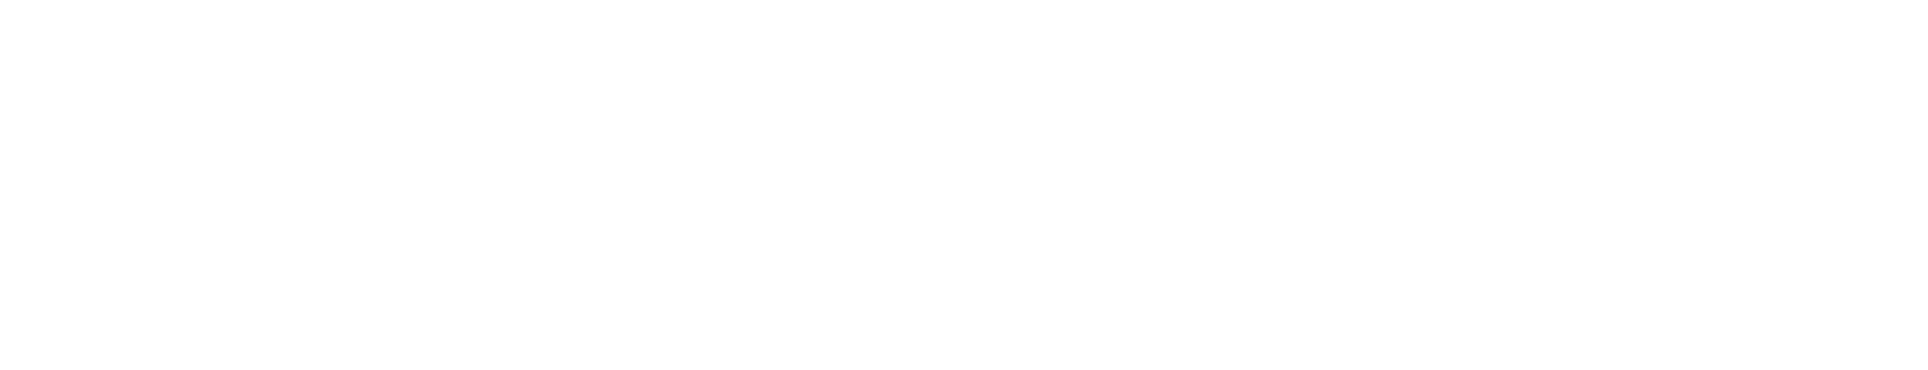 Edward Scissorhands logo